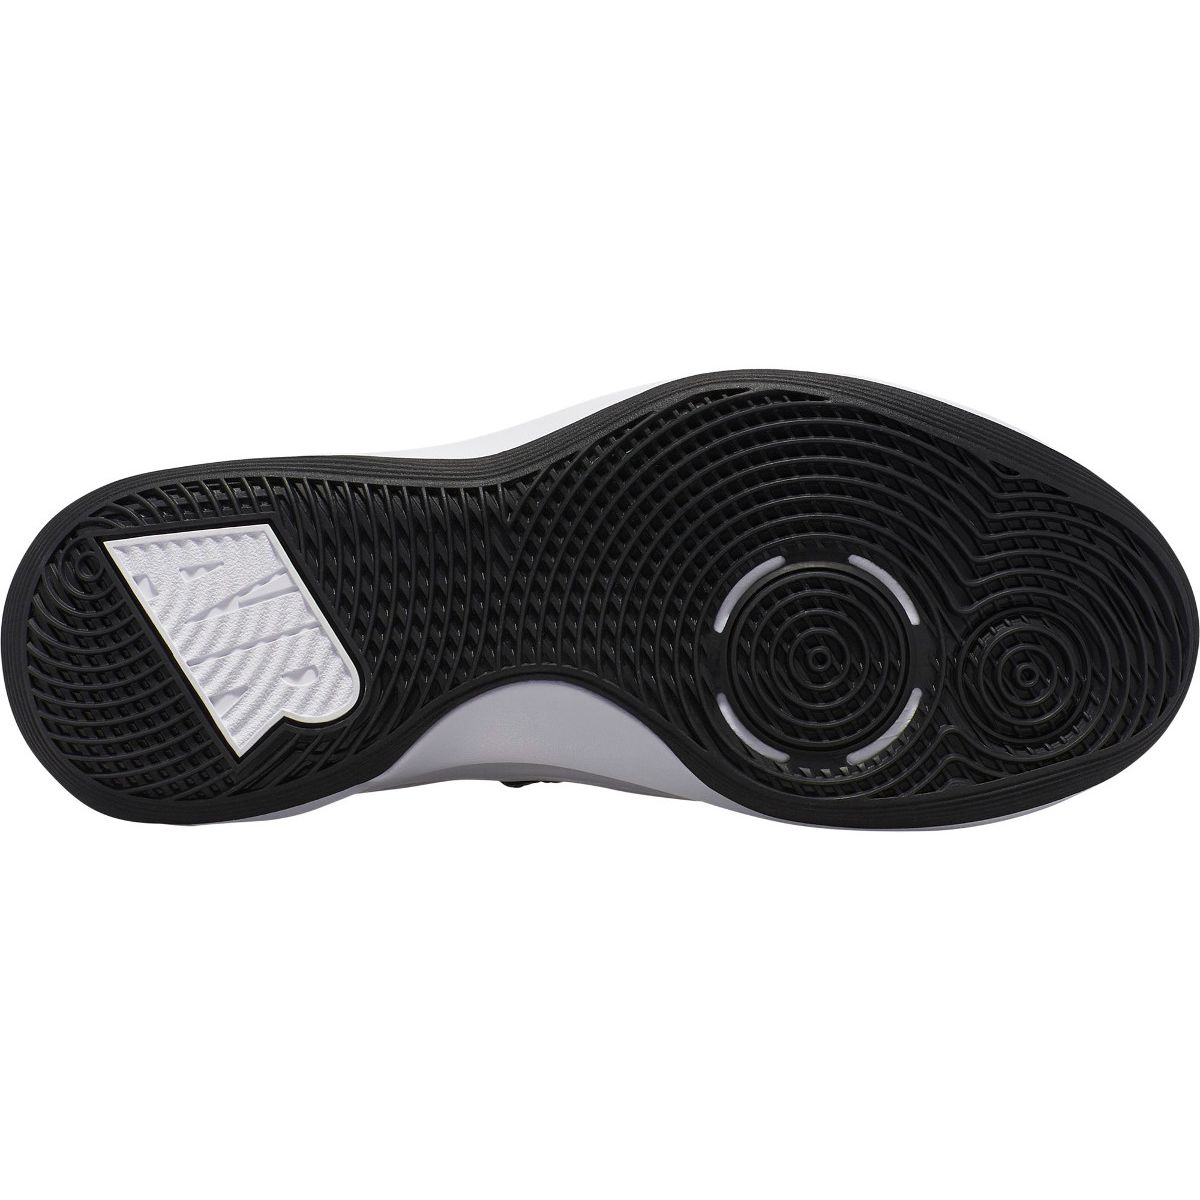 Nike Air Versitile IV Men's Basketball Shoes AT1199-600